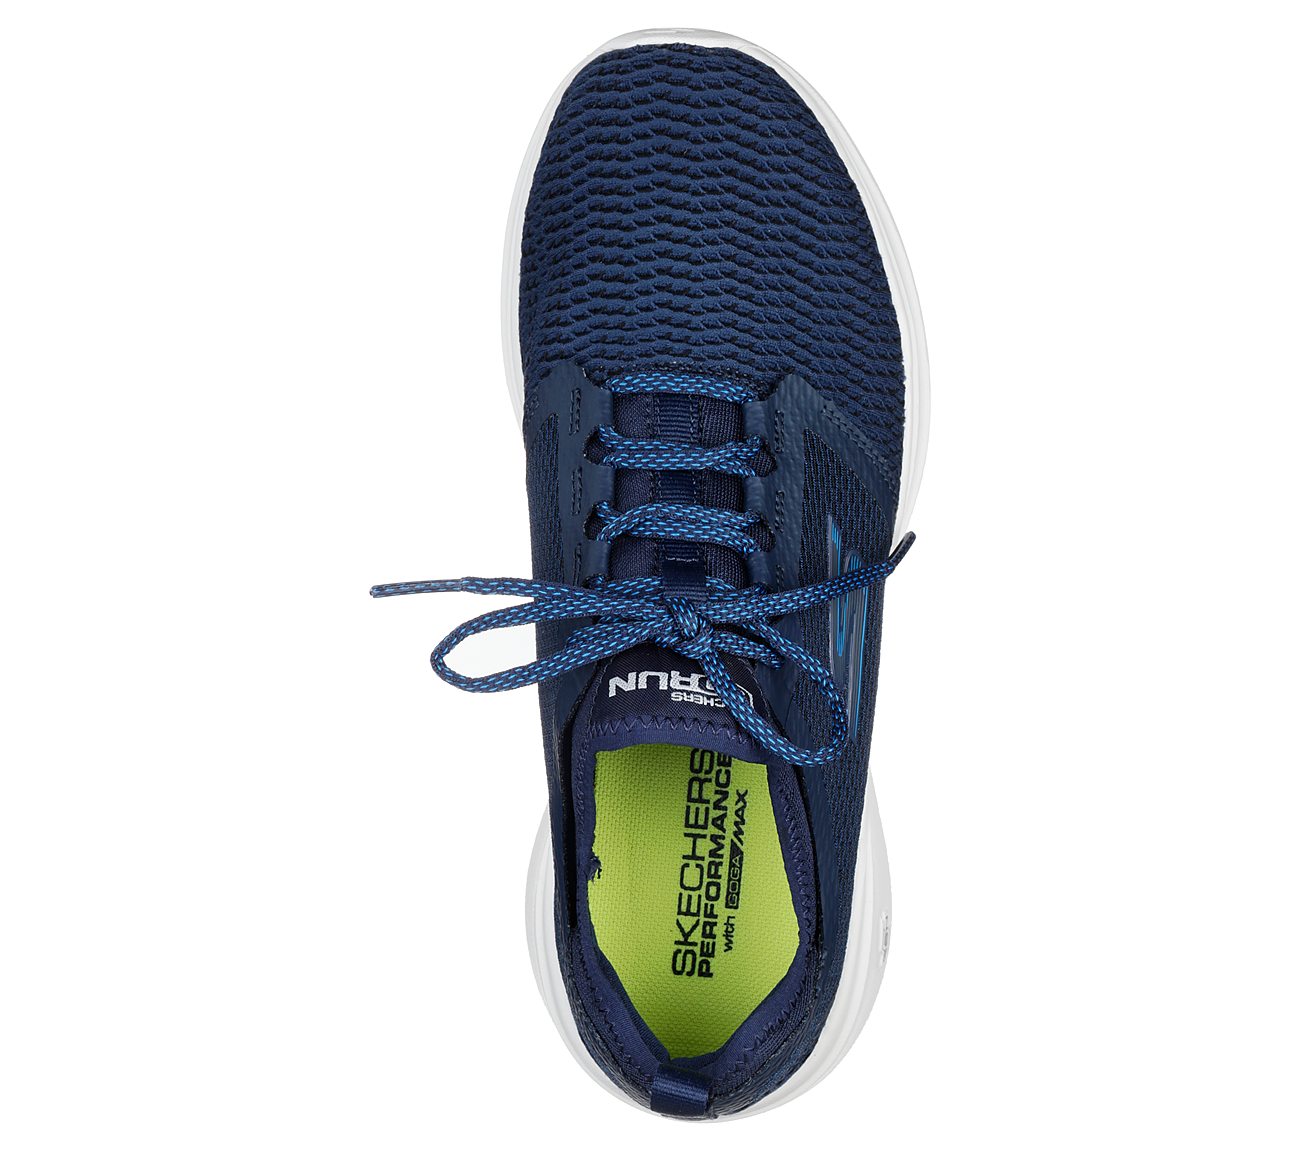 GO RUN FAST -, NAVY/BLUE Footwear Top View